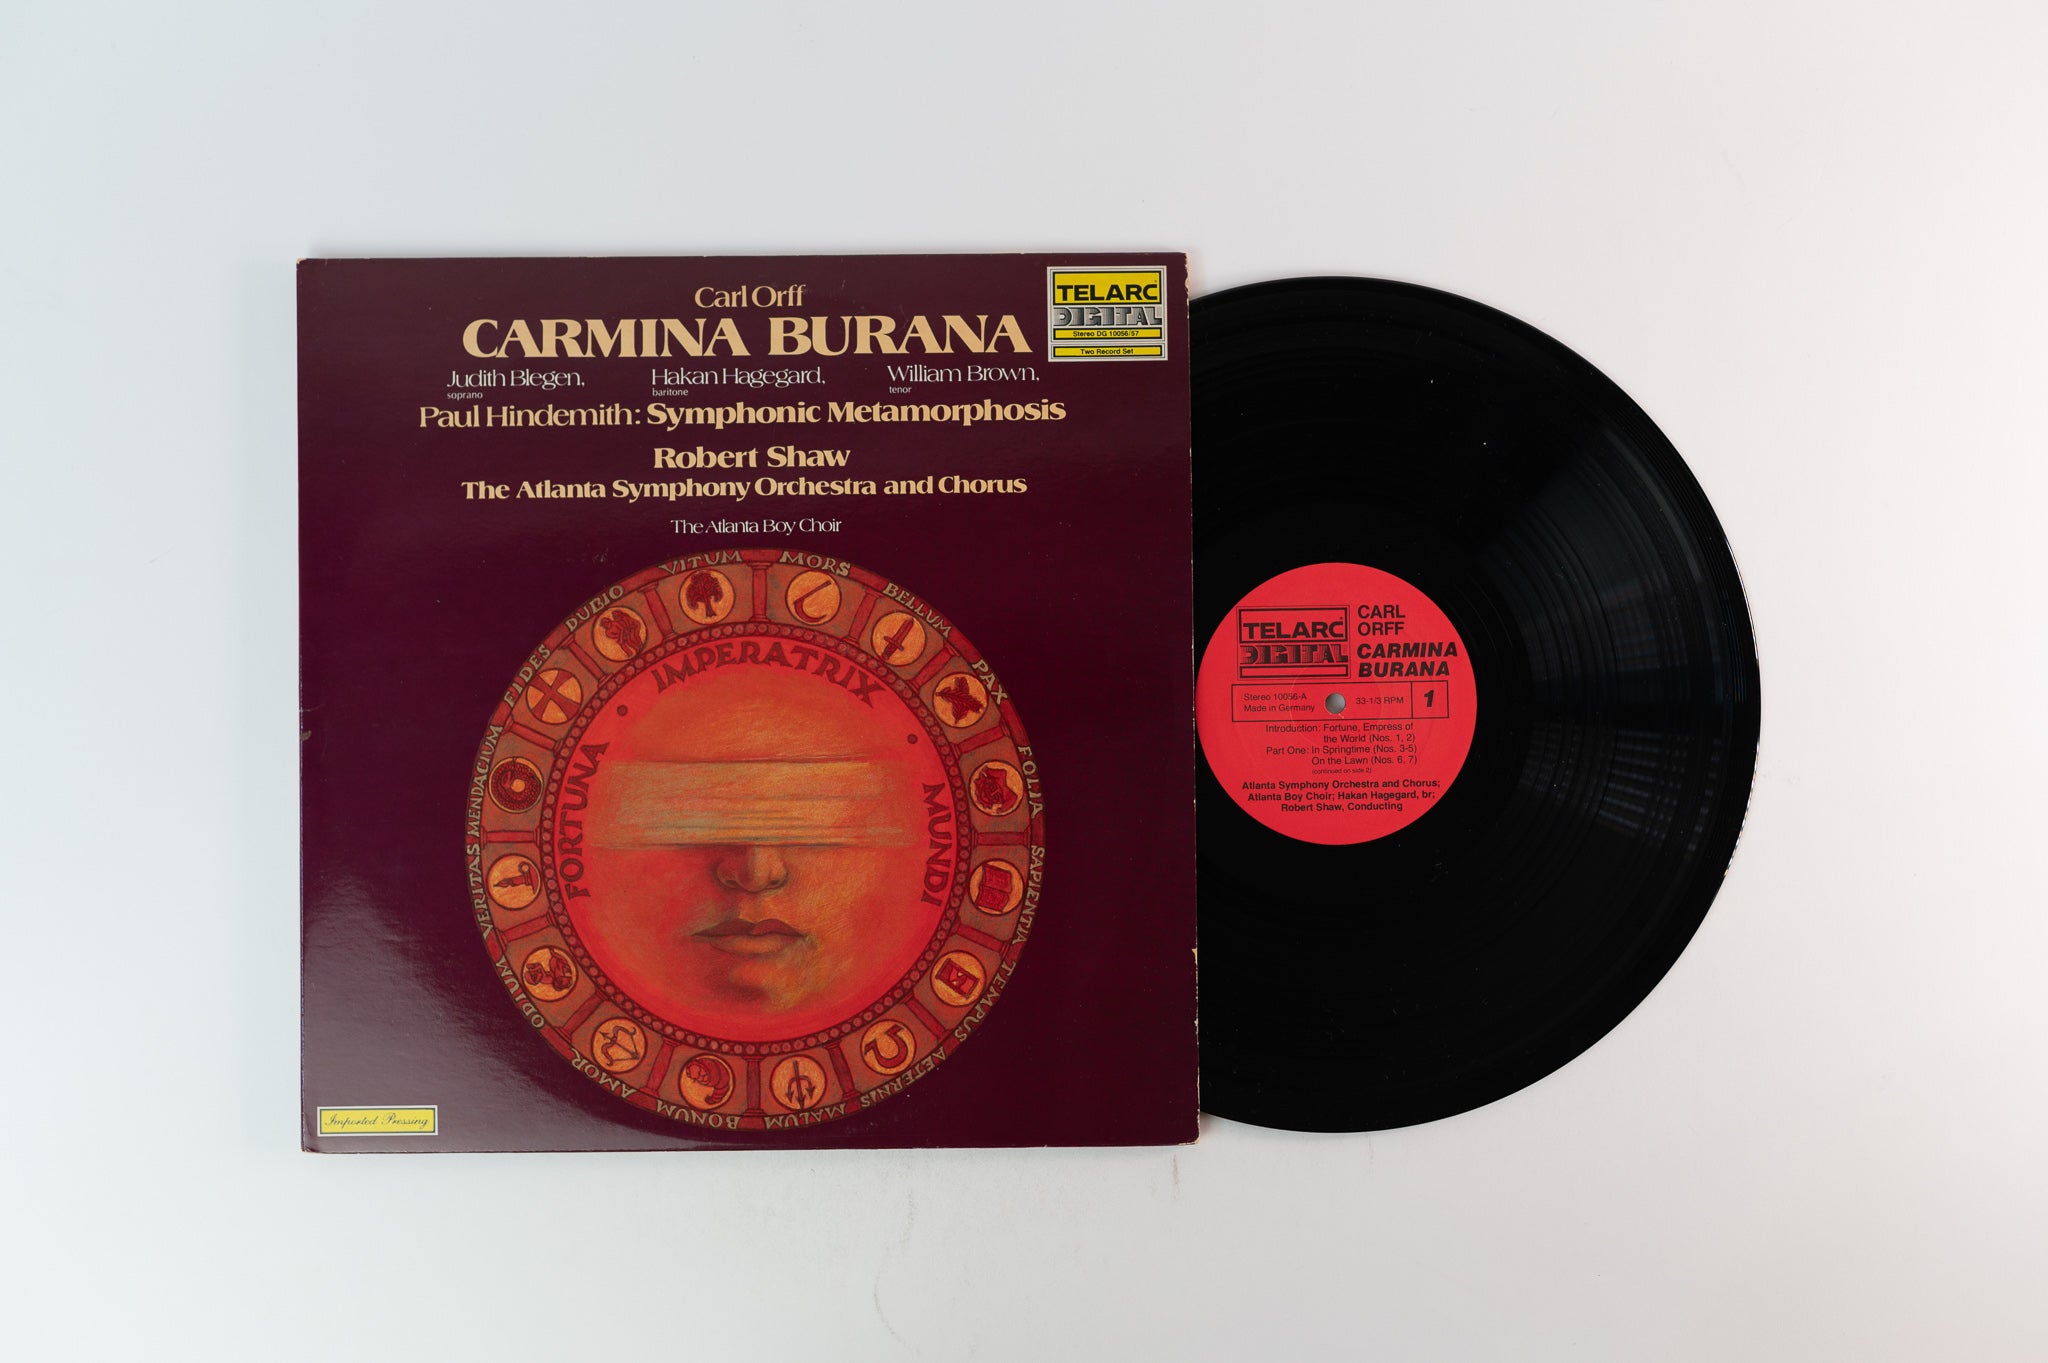 Carl Orff - Carmina Burana, Symphonic Metamorphosis on Telarc Digital German Pressing